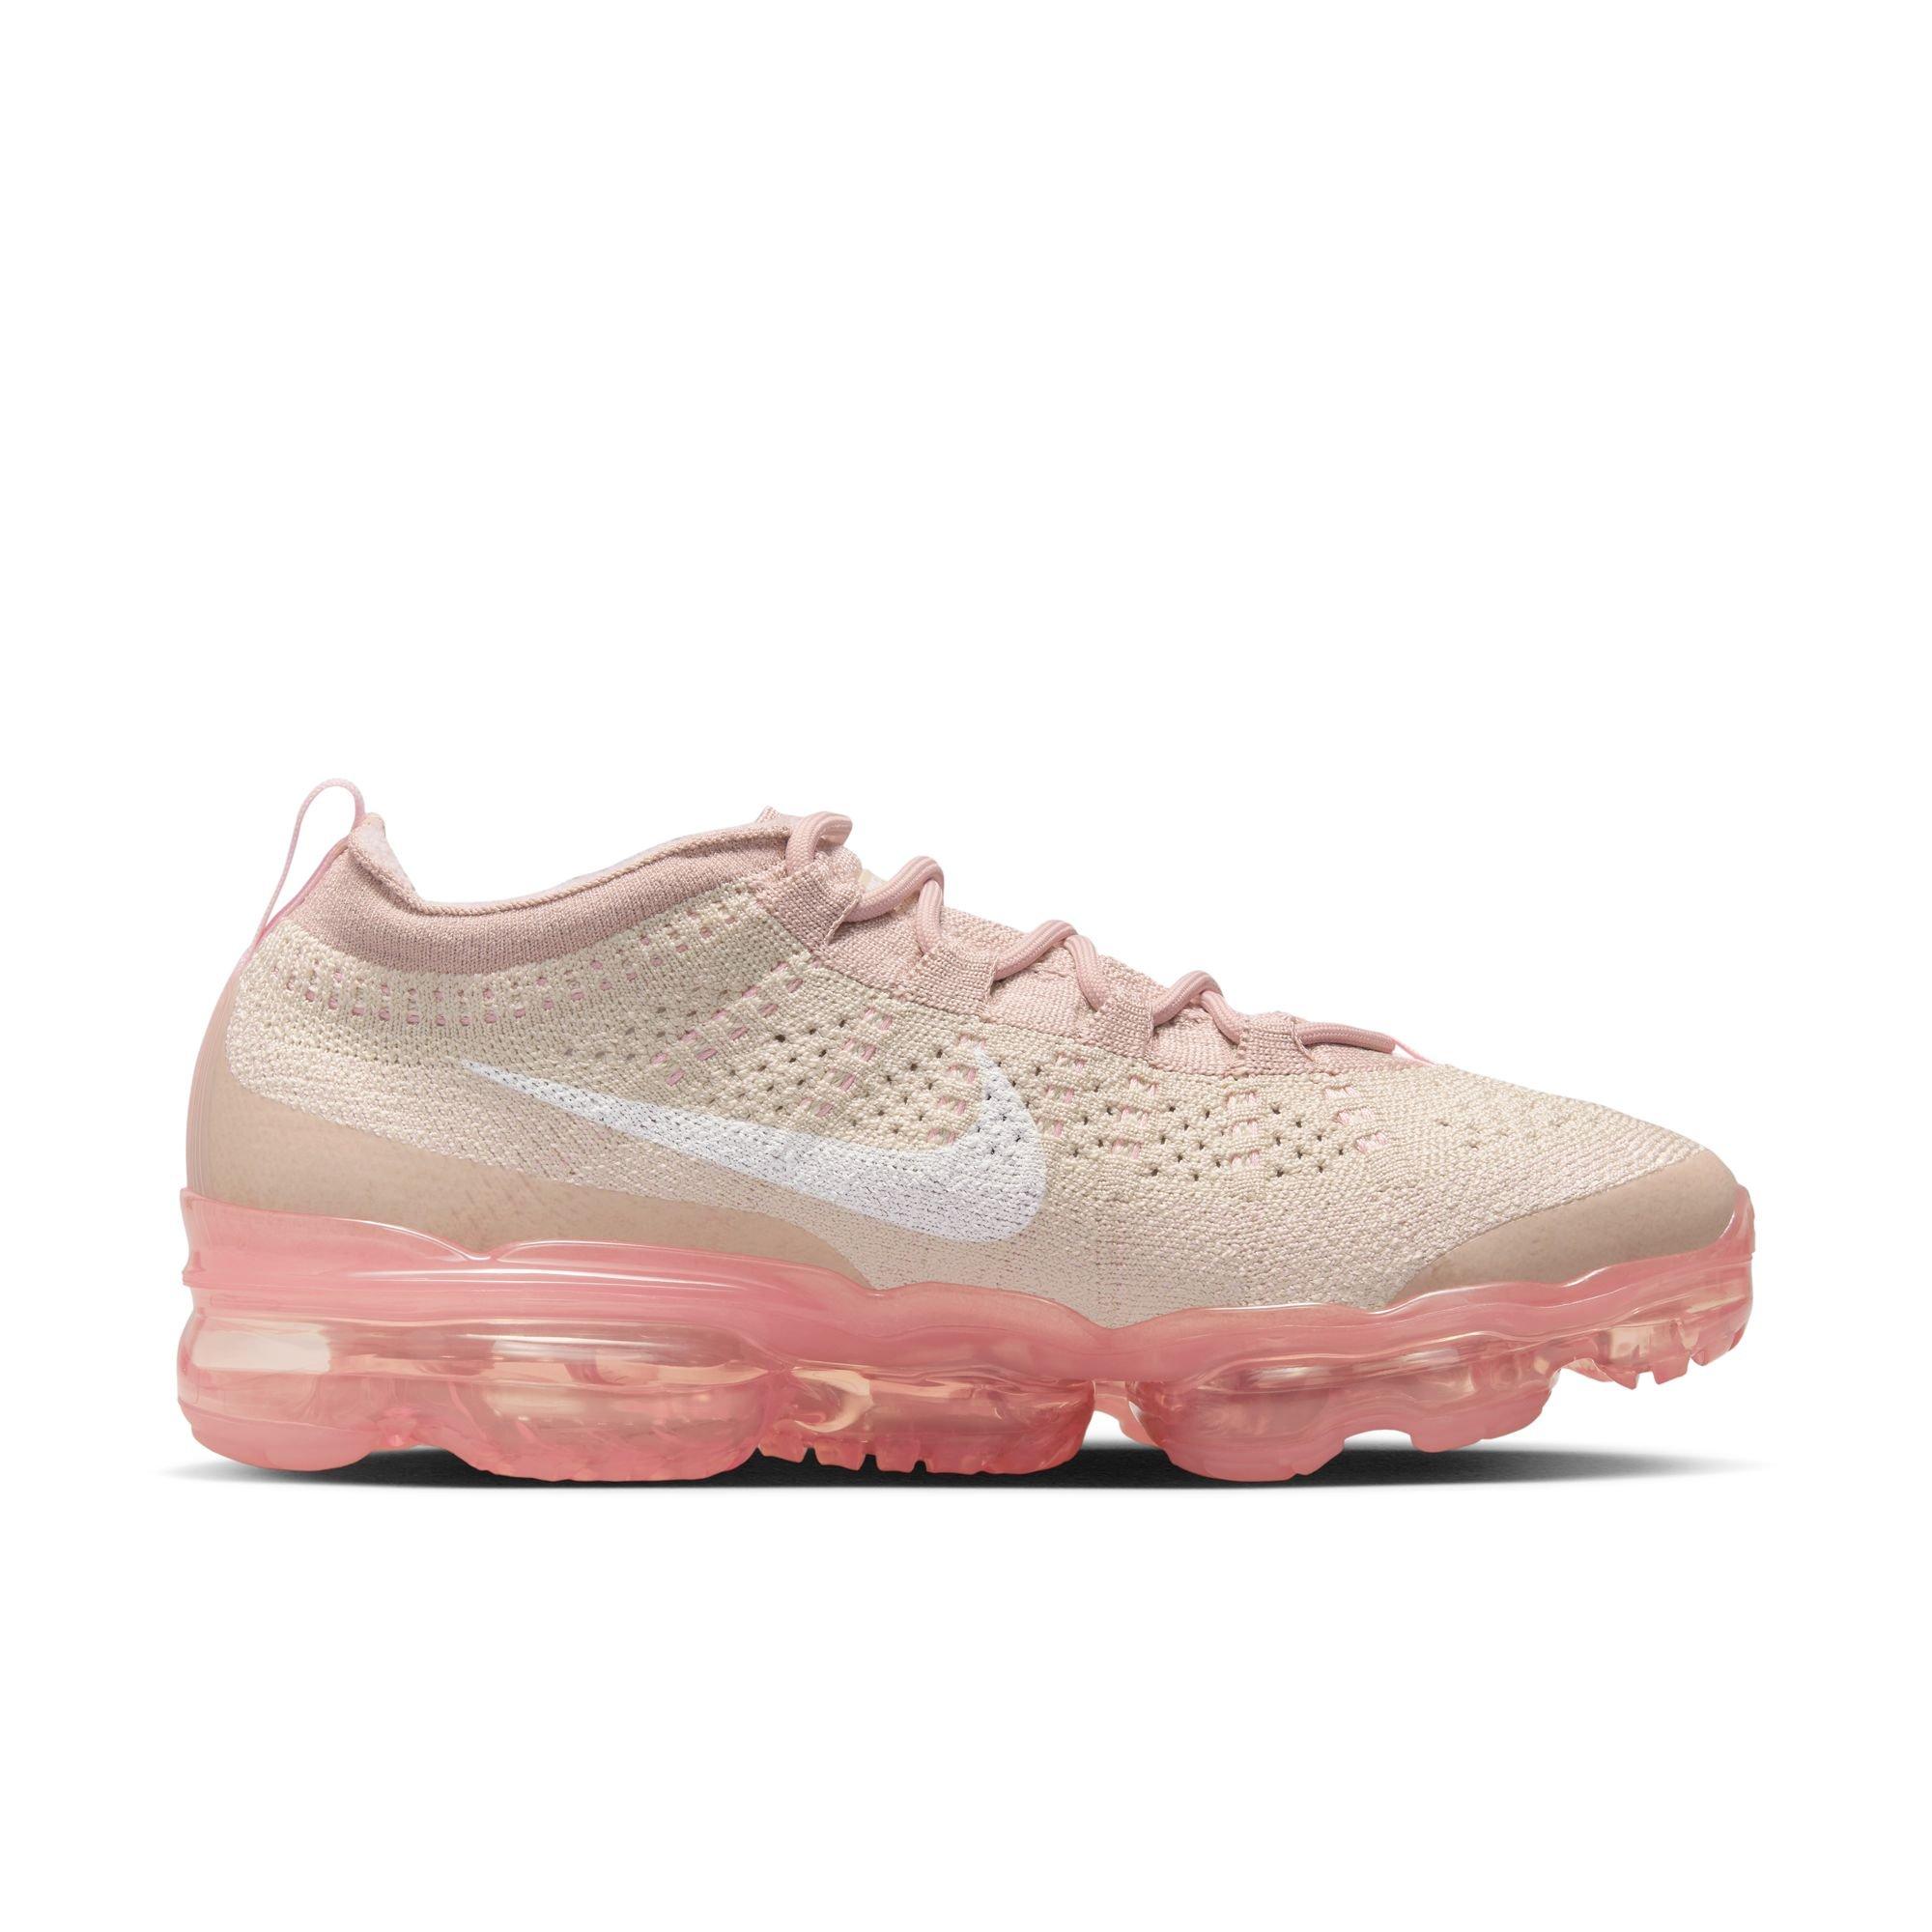 Nike VaporMax Pink Sneakers for Women